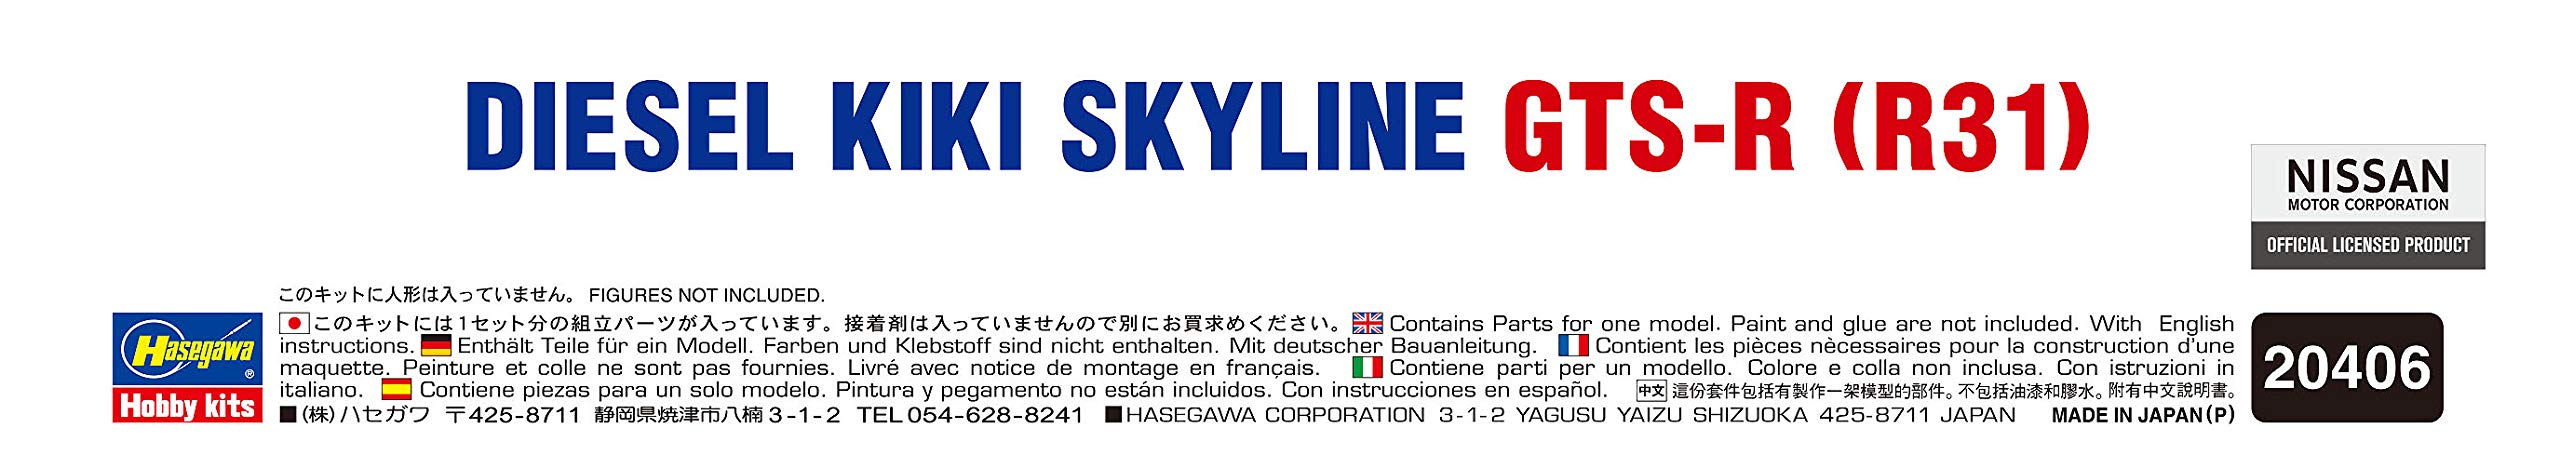 Hasegawa 1/24 scale Nissan Diesel Kiki Skyline GTS-R (R31) Model Kit 620406 NEW_7